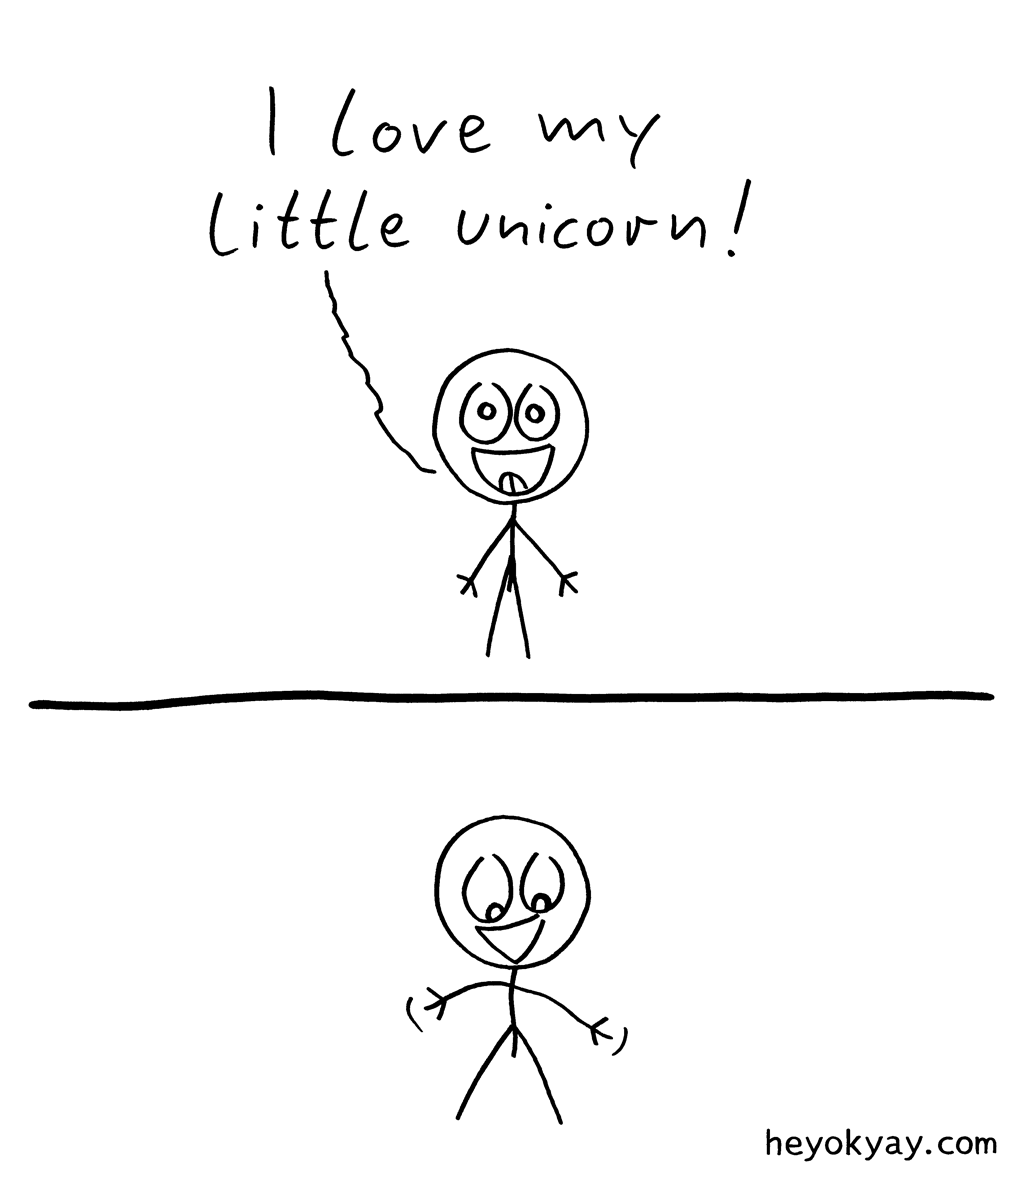 My little unicorn | Hey ok yay? | I love my little unicorn | unicorns, cute